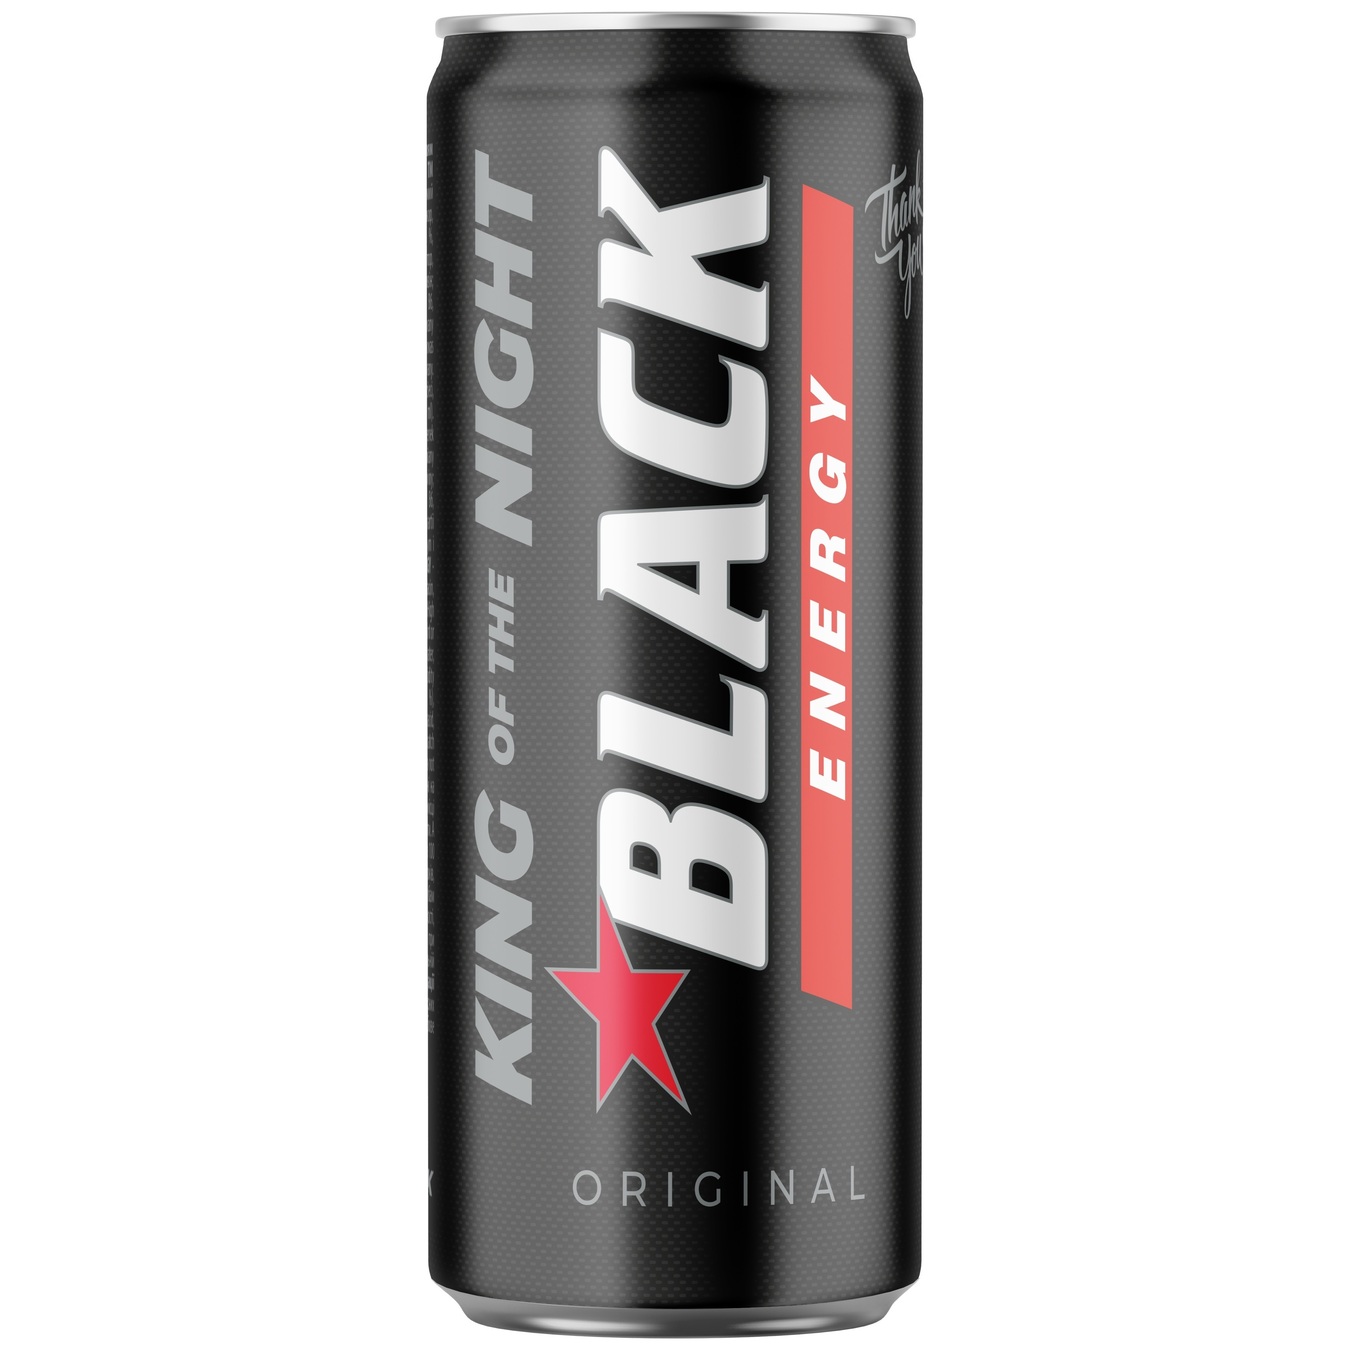 Energy drink Black Energy Original 0.25 l iron can